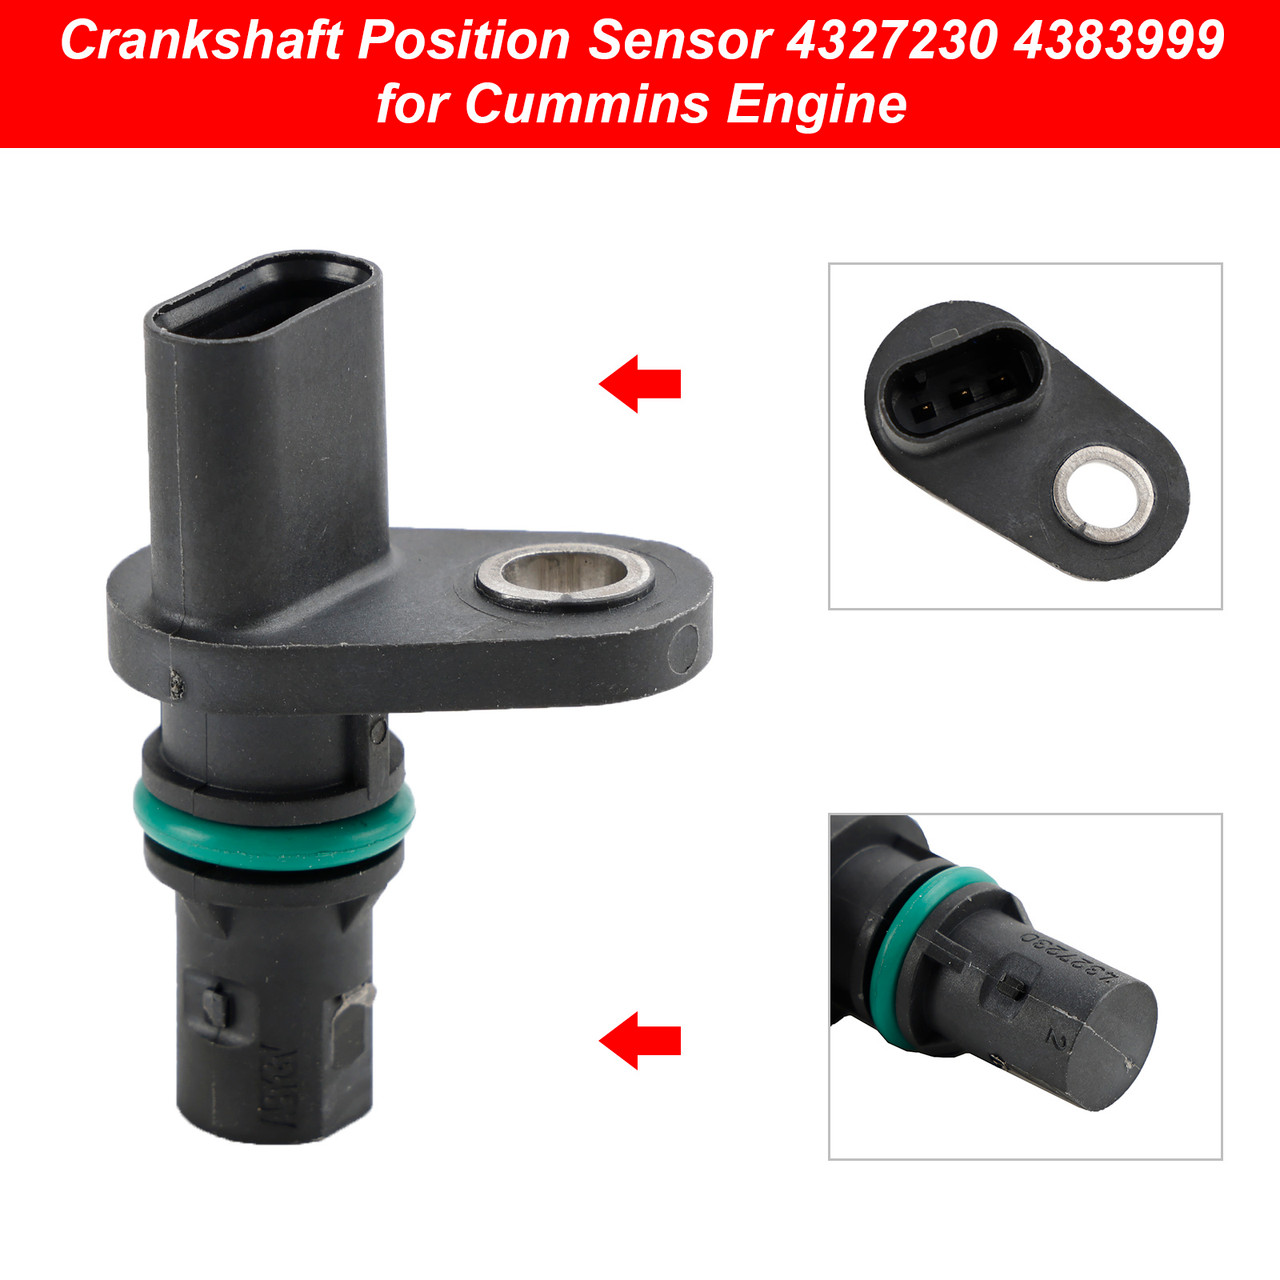 Crankshaft Position Sensor 4327230 4383999 for Cummins Engine